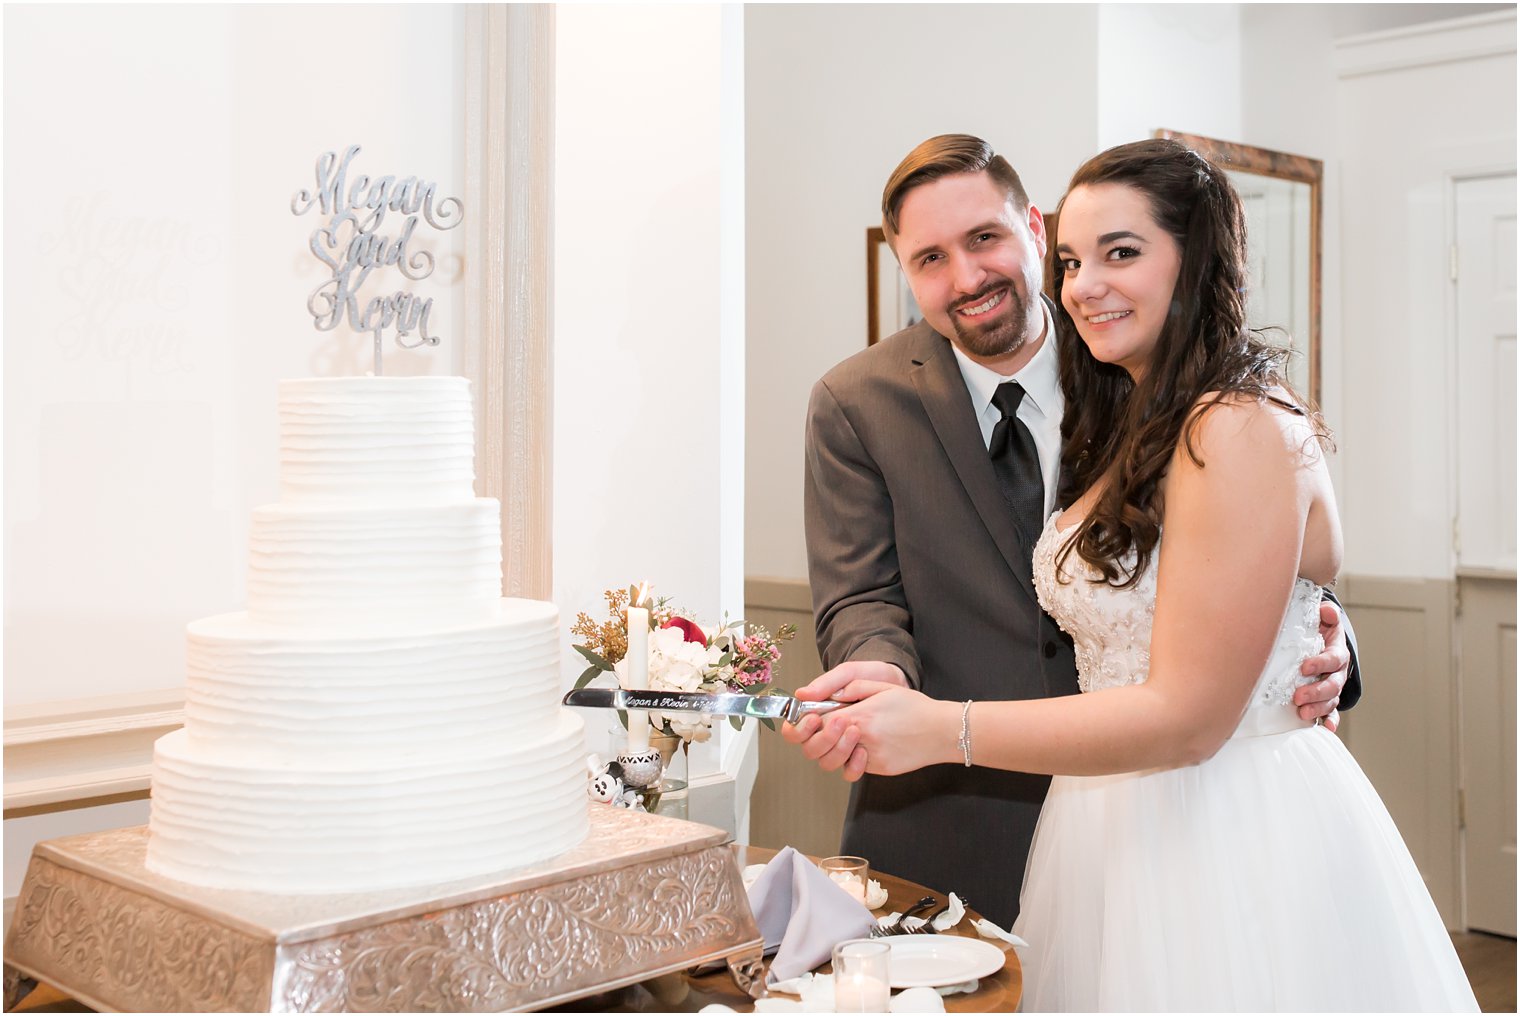 Bride and groom cutting their wedding cake | HollyHedge Estate Wedding Photography by PA Wedding Photographers Idalia Photography